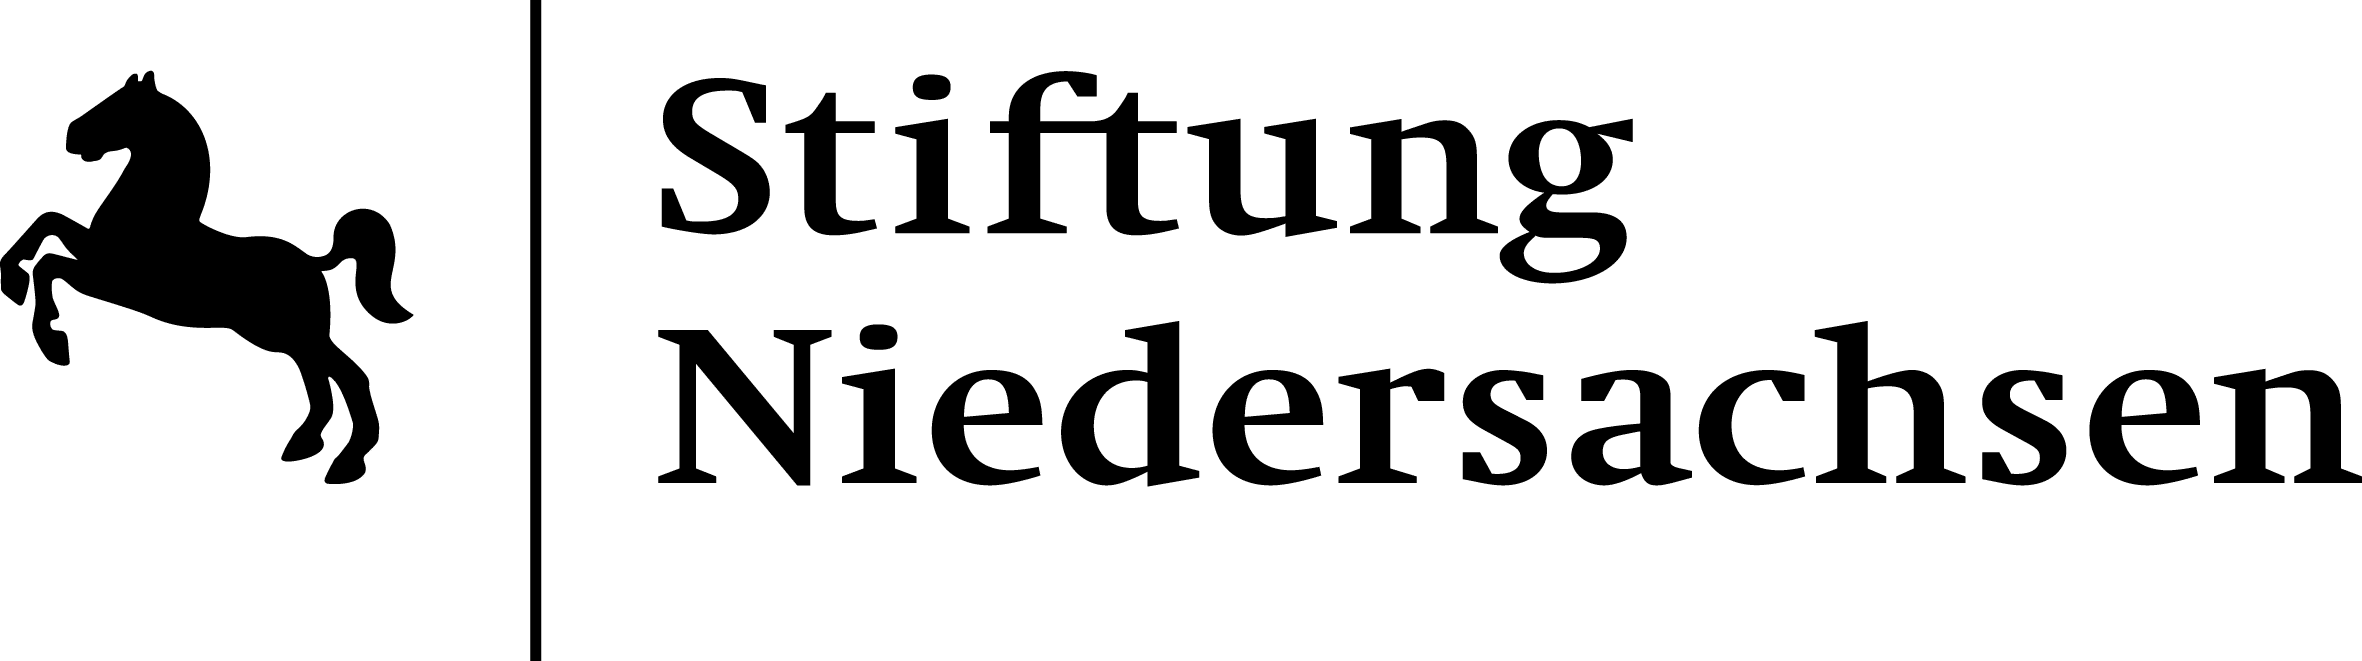 Lower Saxony Foundation logo